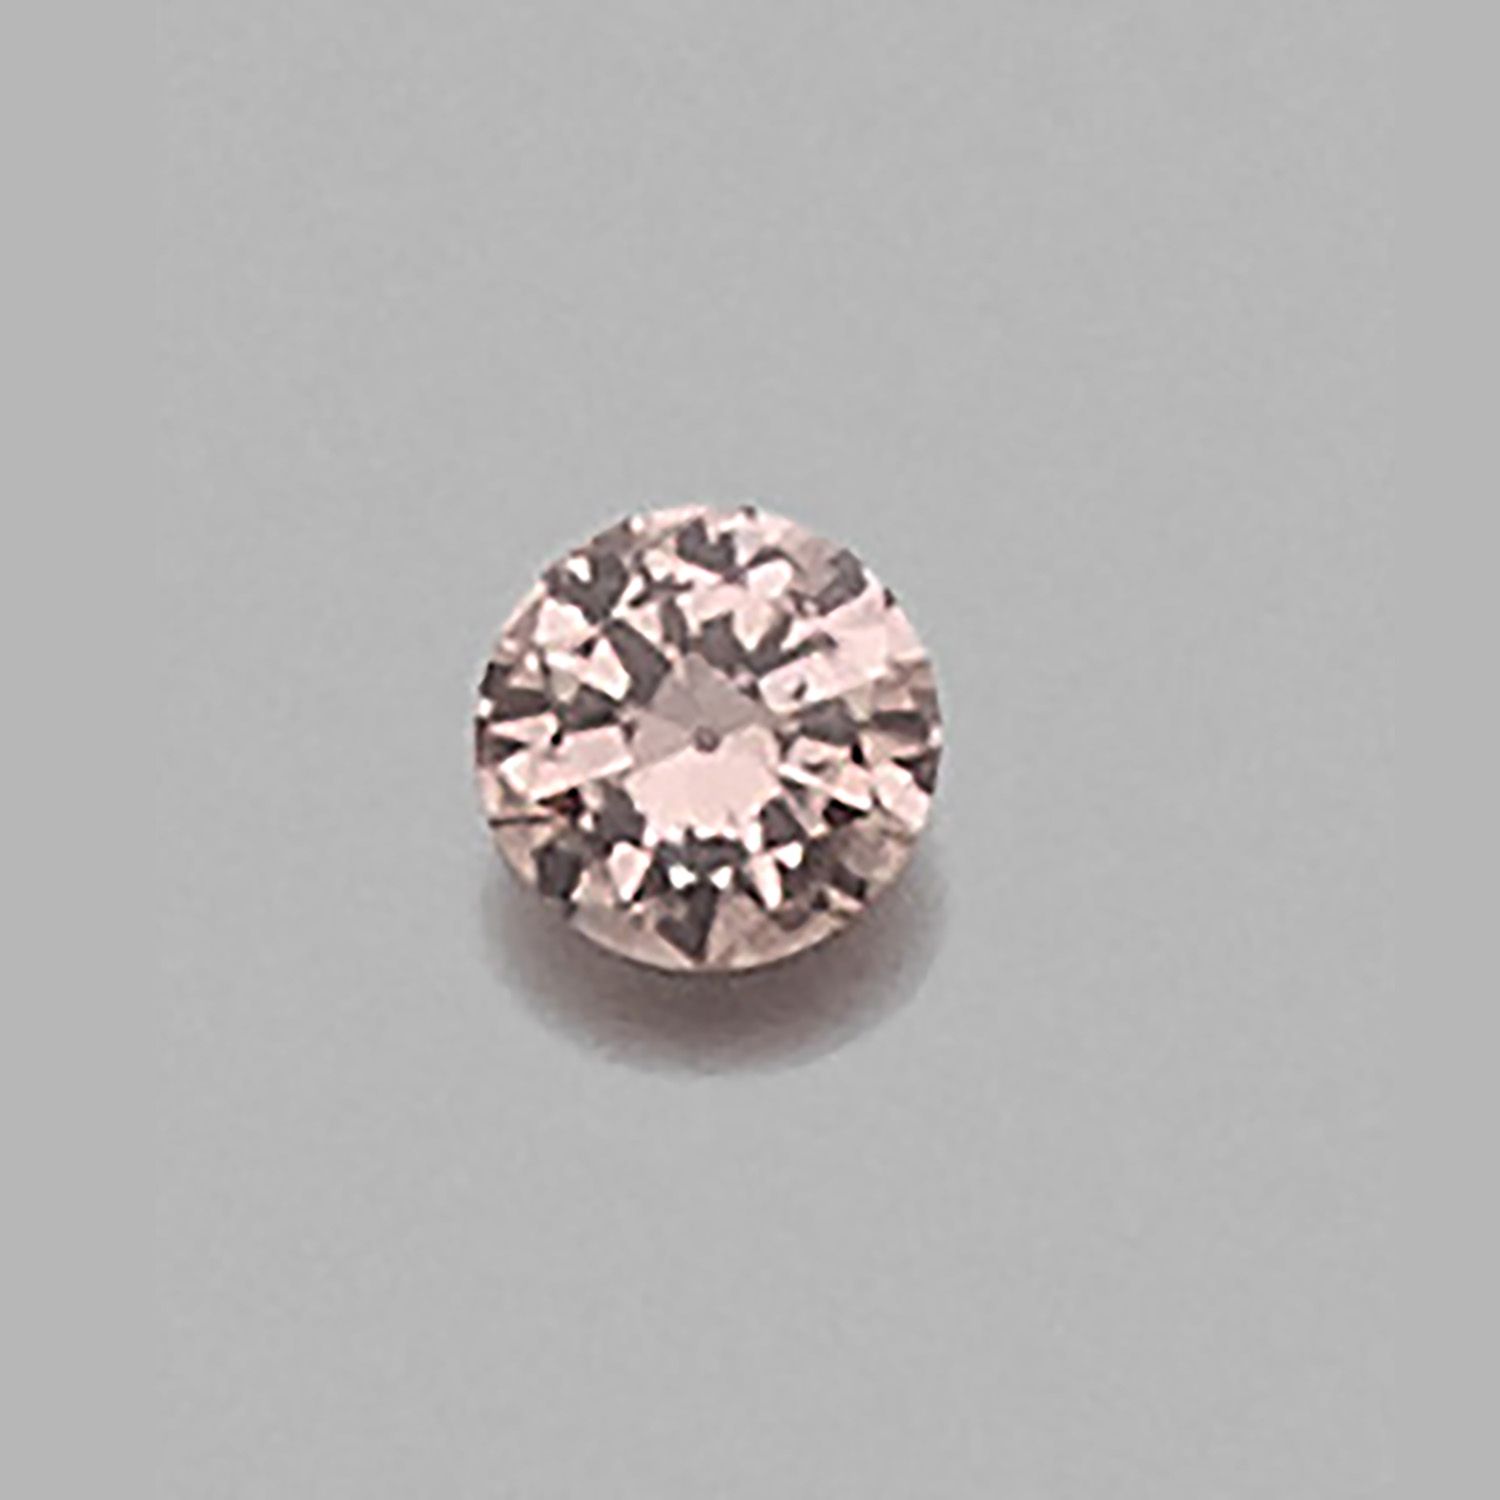 Null DIAMANT 0,61 CARAT FANCY PURPLISH-PINK

Diamant taille brillant sur papier &hellip;